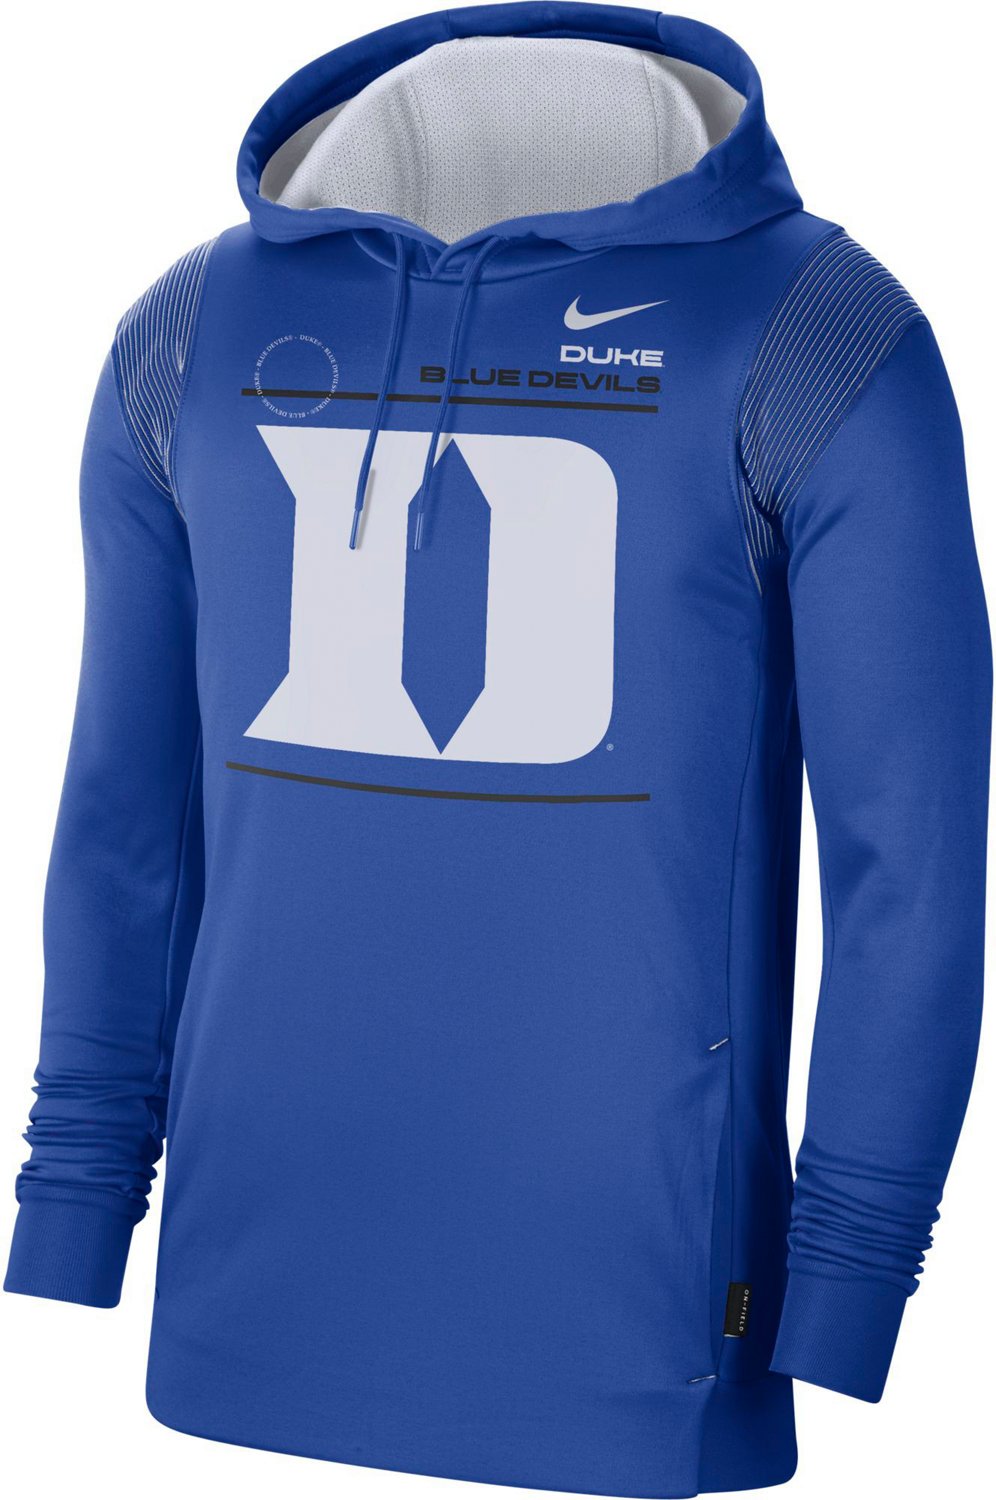 Nike Men's Duke University Therma Pullover Hoodie | Academy